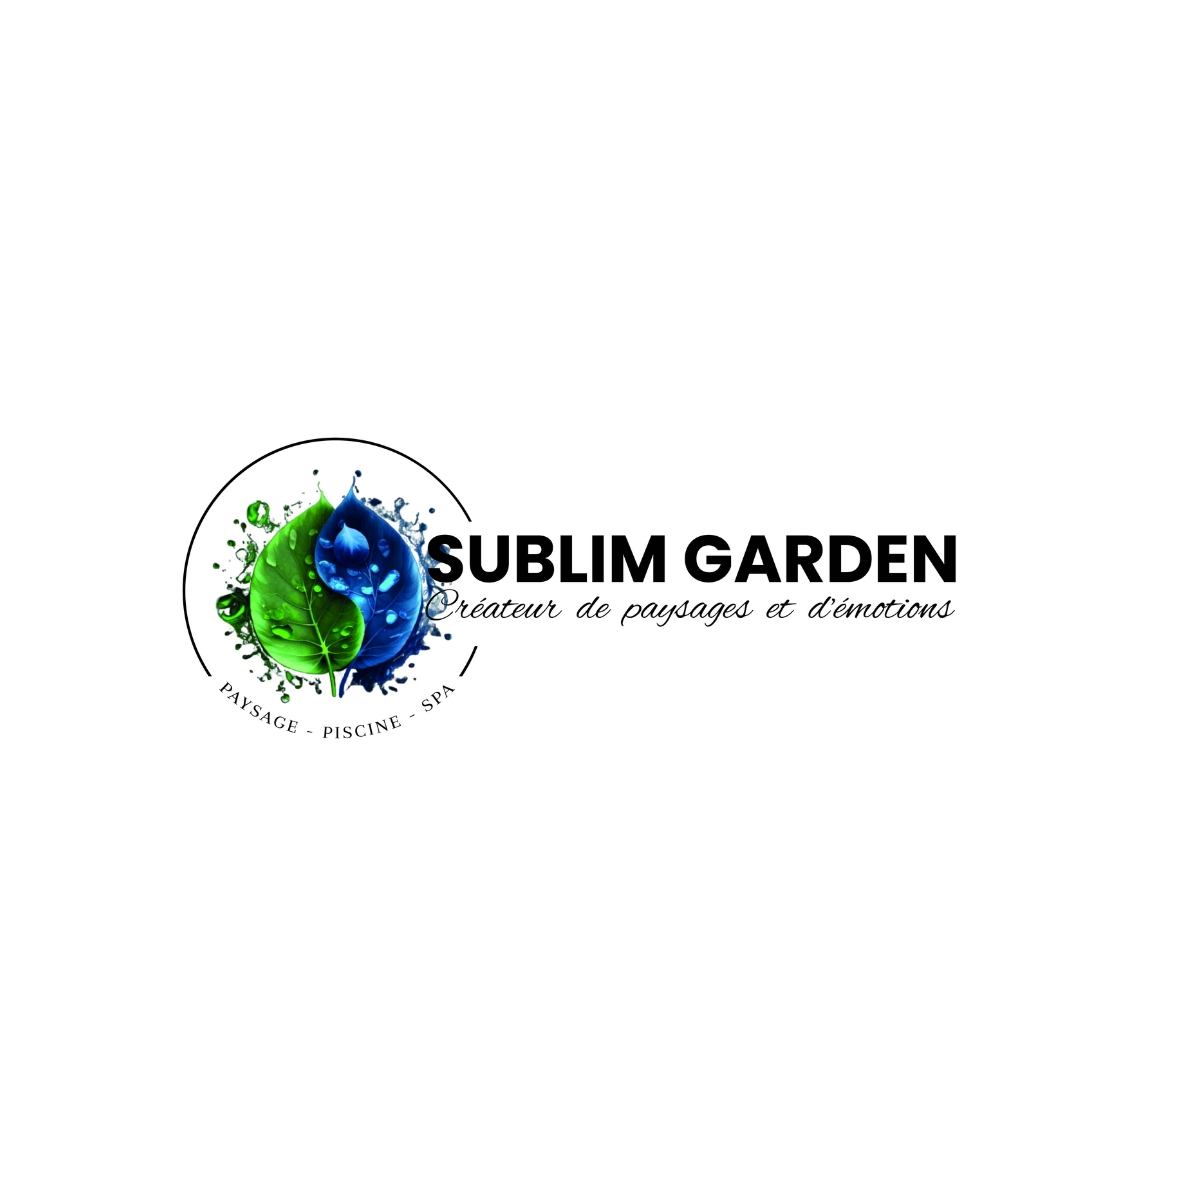 Sublim Garden